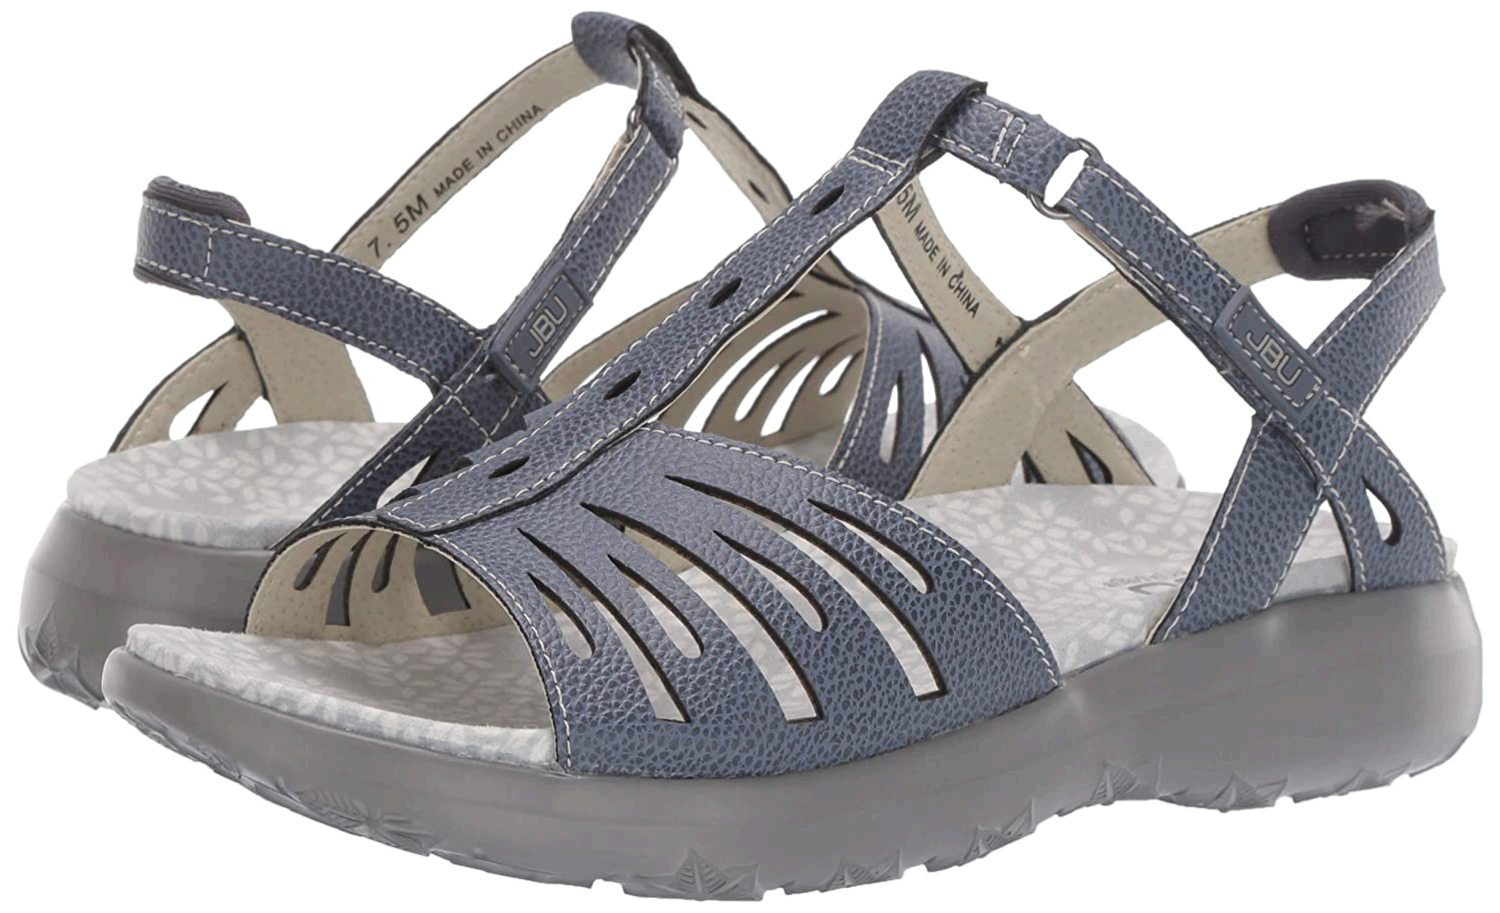 JBU Womens Flat Sandals in Blue Color, Size 6 BEH | eBay